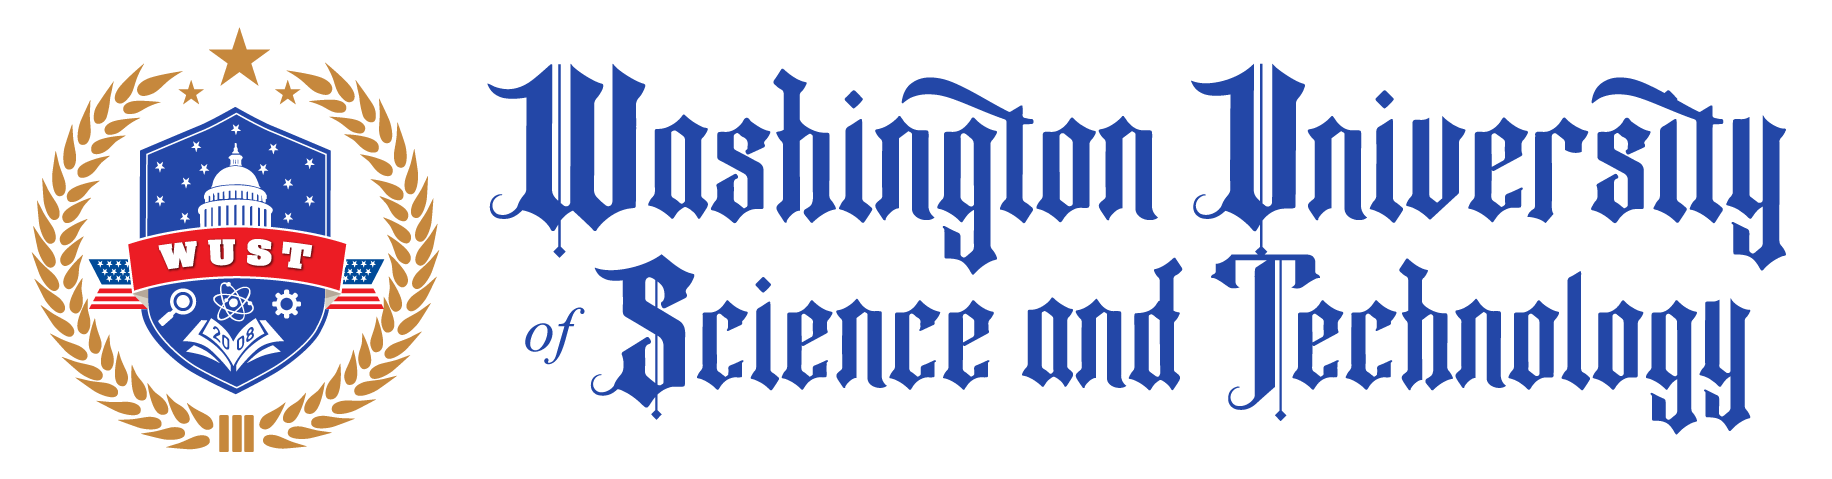 Washington University of Science Technology